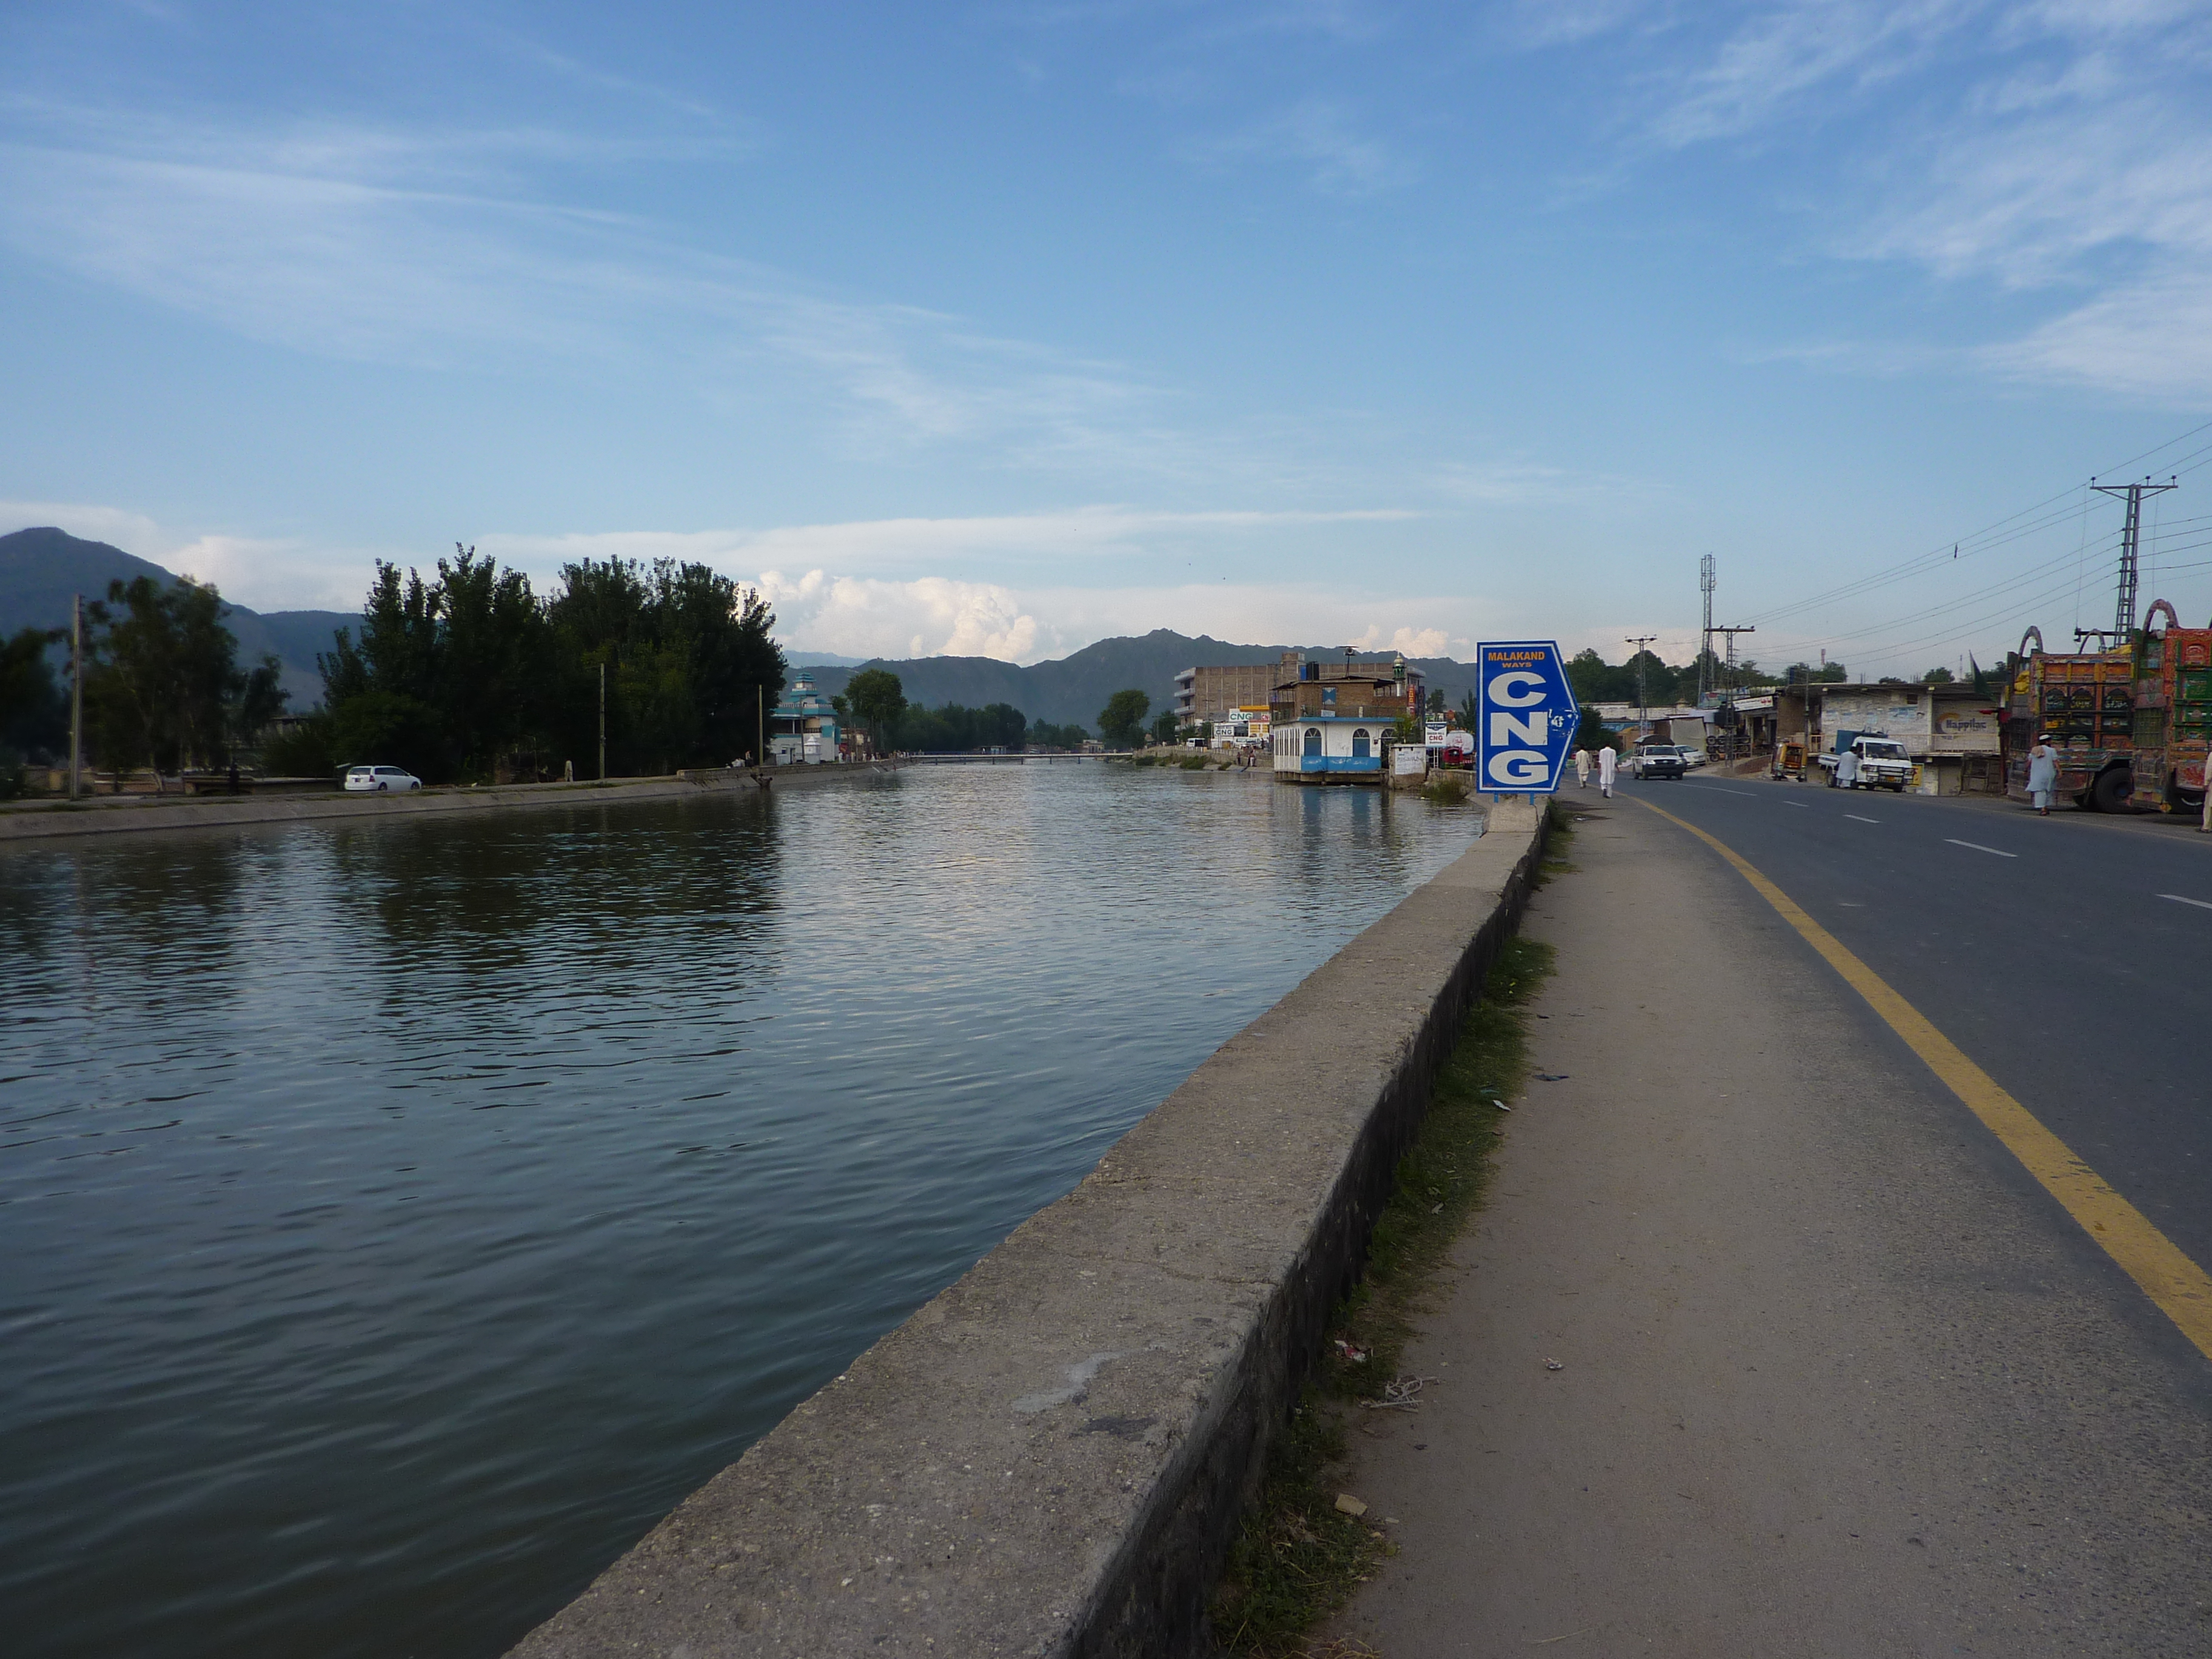 File:Batkhela water canal alongside the main G.T. road.jpg - Wikipedia